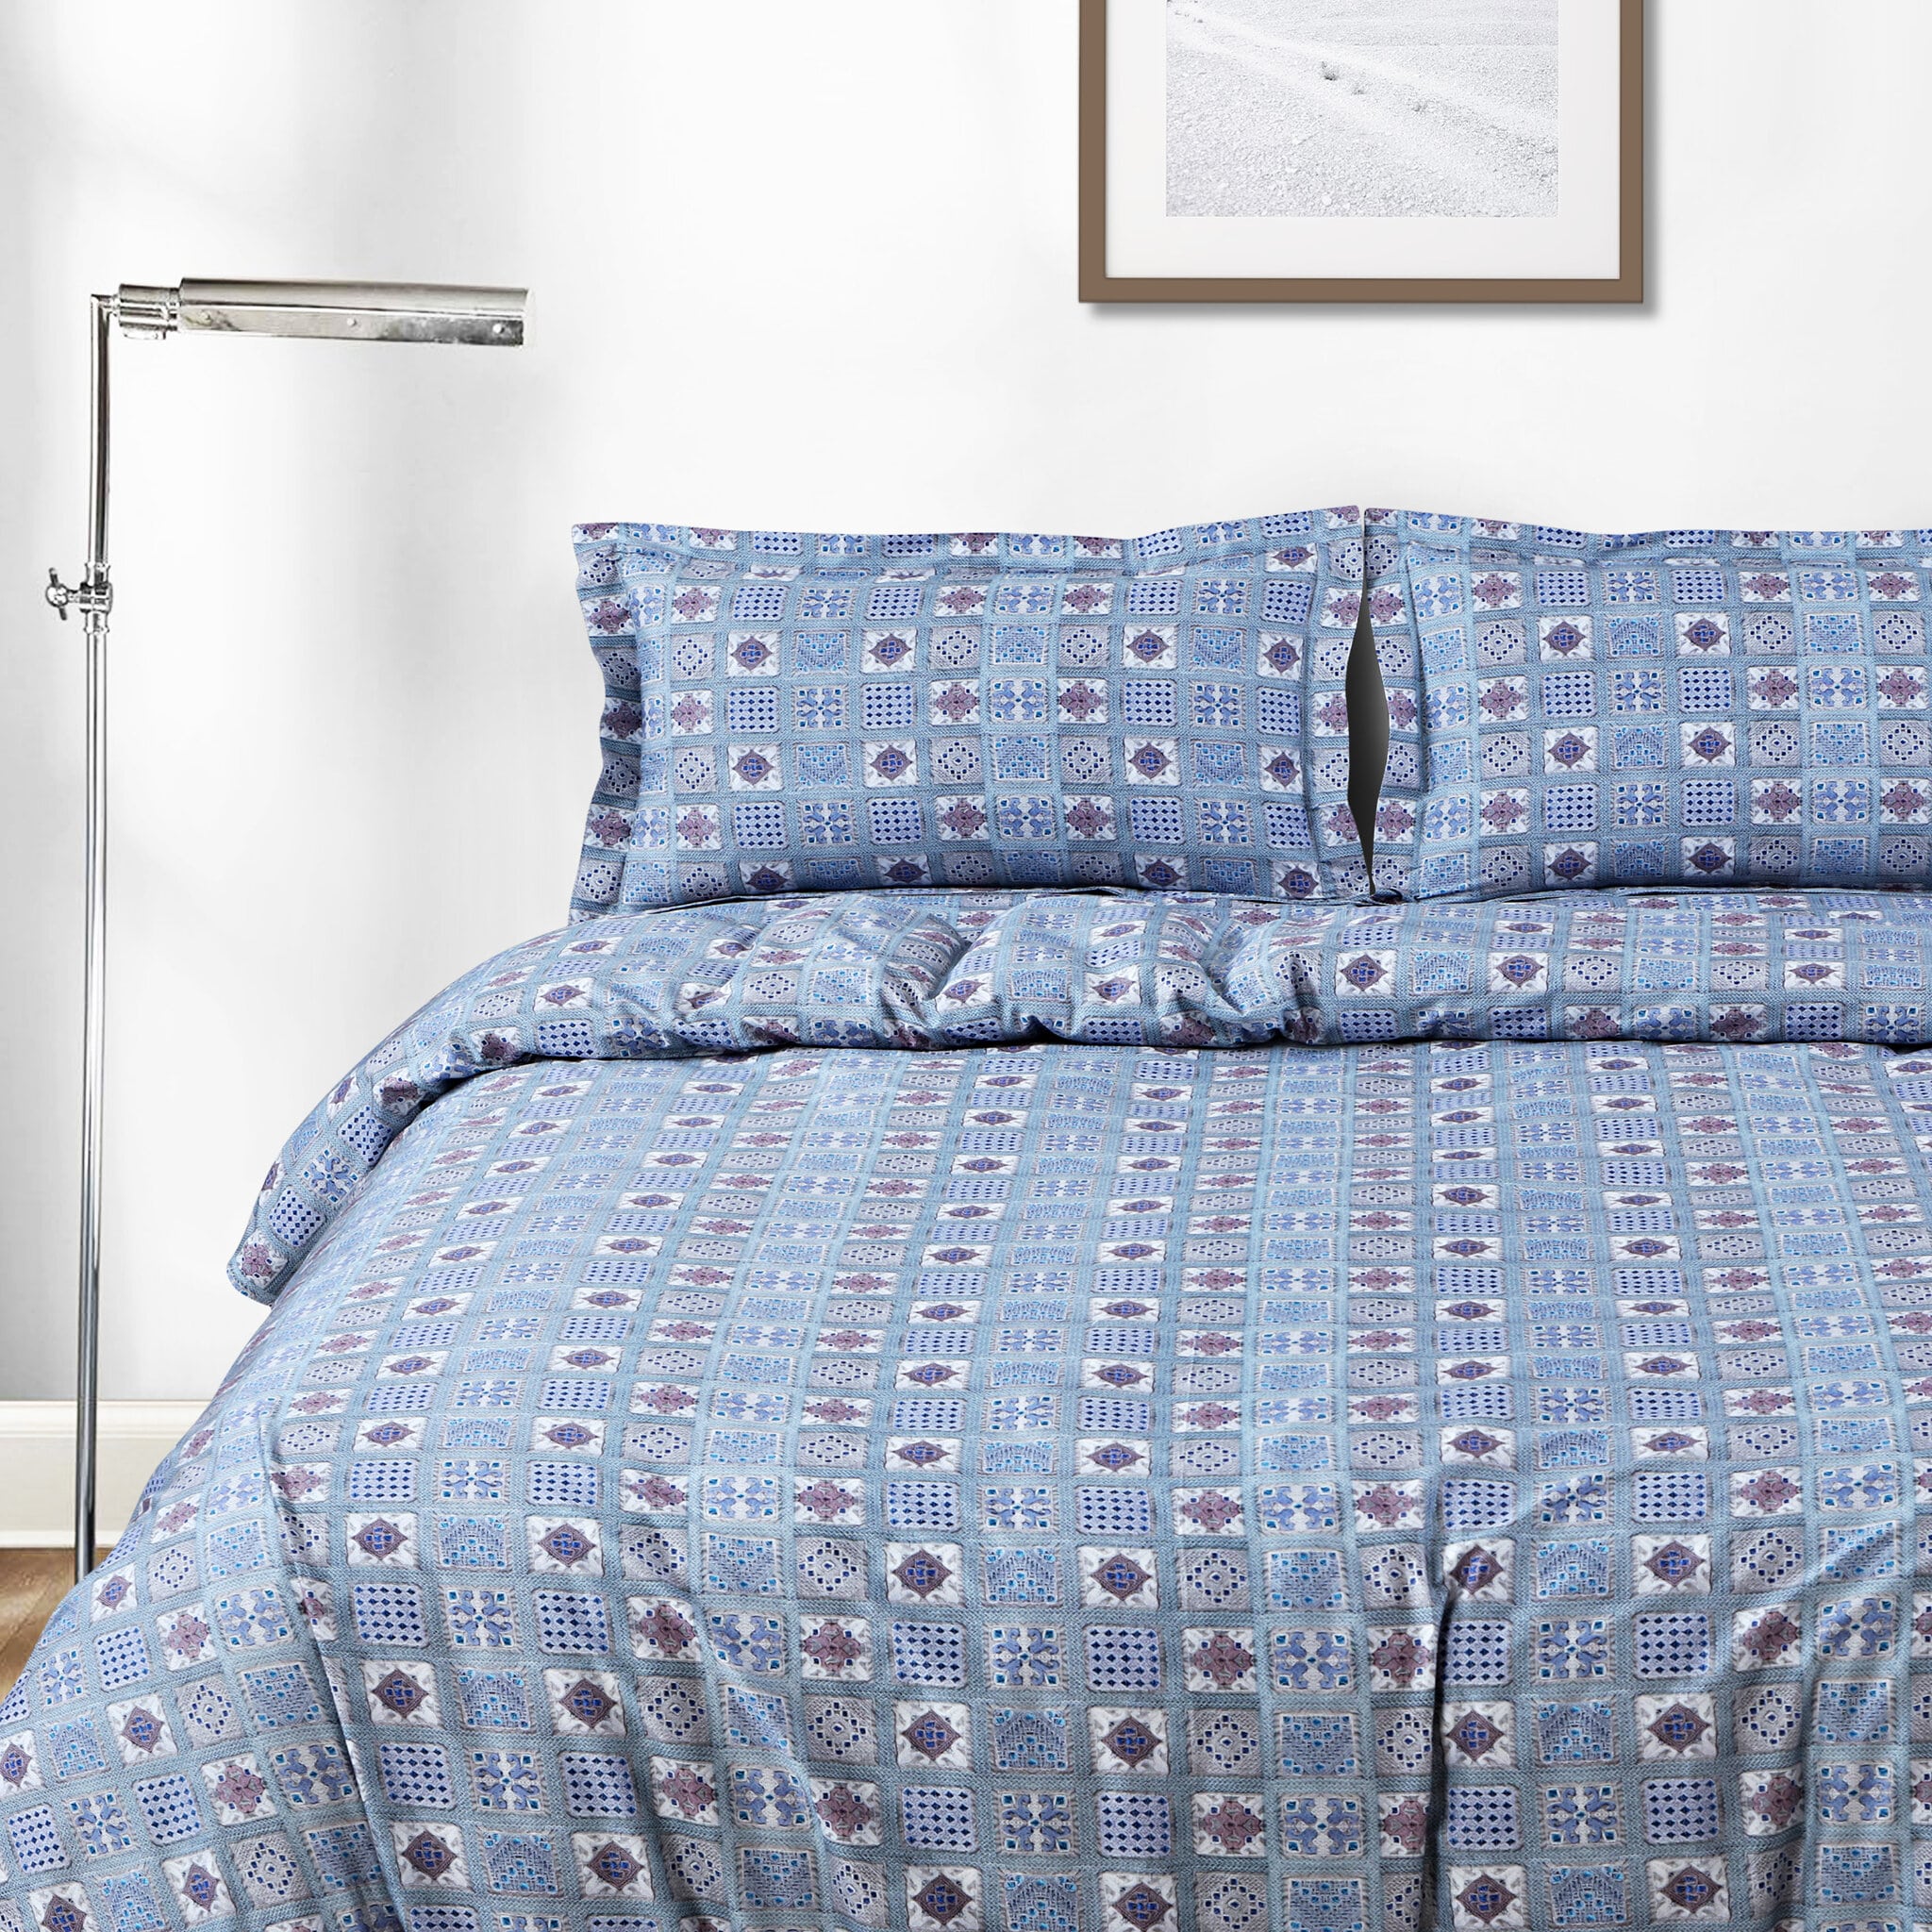 Malako Basel Bedding Set - Blue Abstract 100% Cotton King Size Bedsheet With Comforter